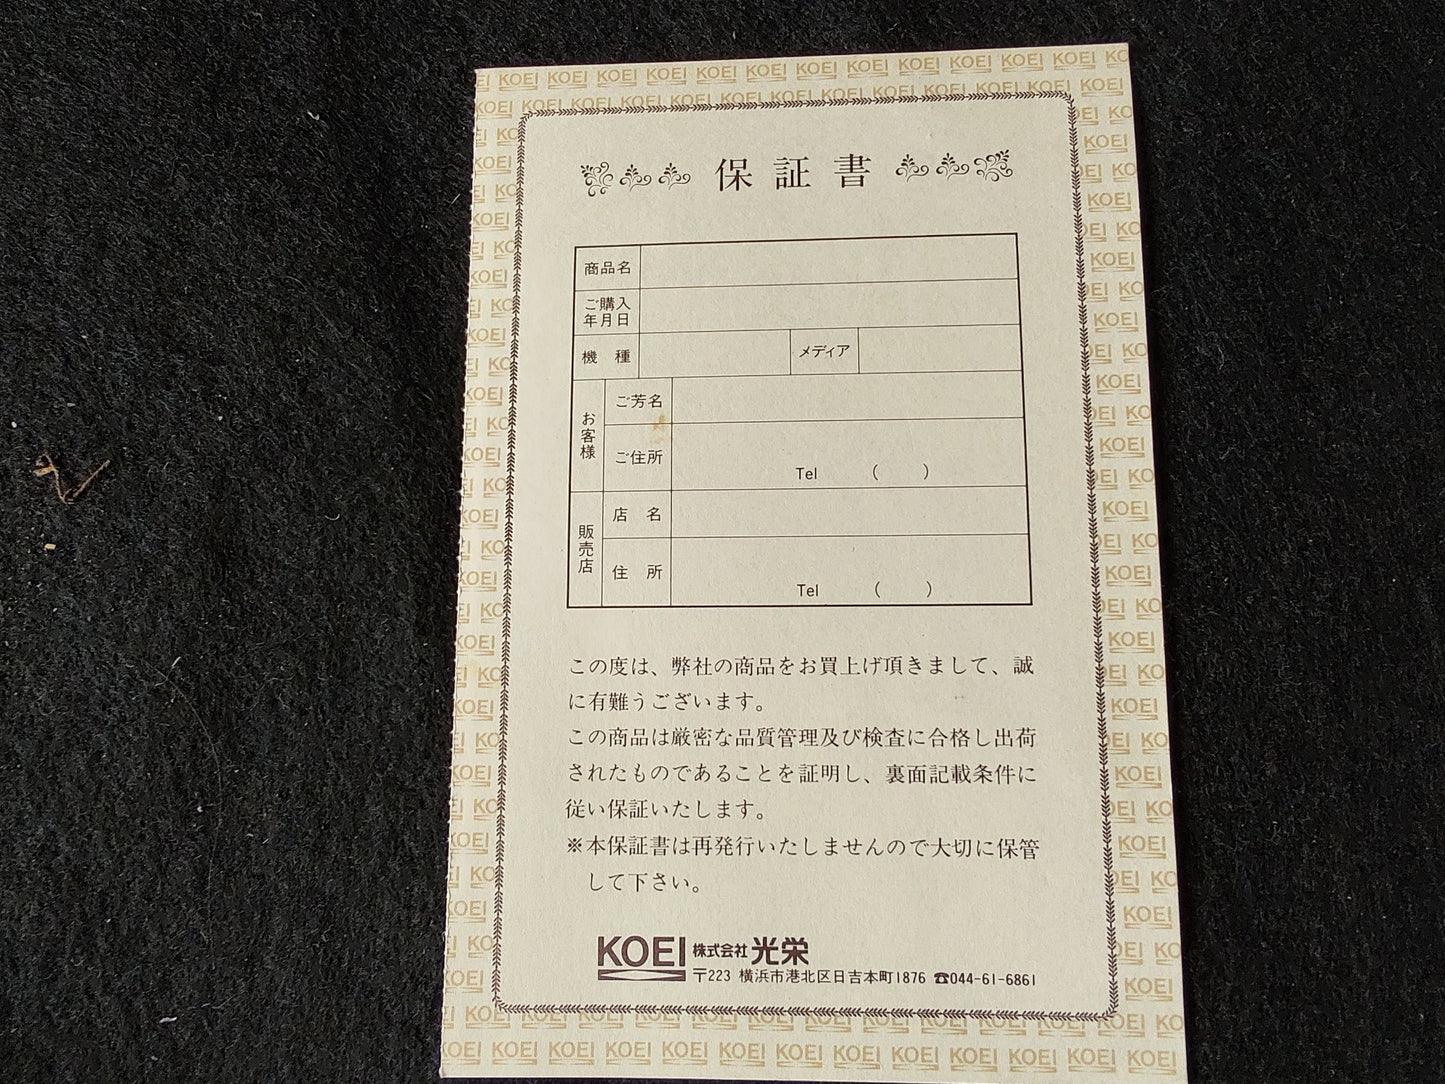 NOBUNAGA NO YABO ZENKOKU BAN MSX/MSX2 Game Cartridge, w/Manual, Box, set-f0730-